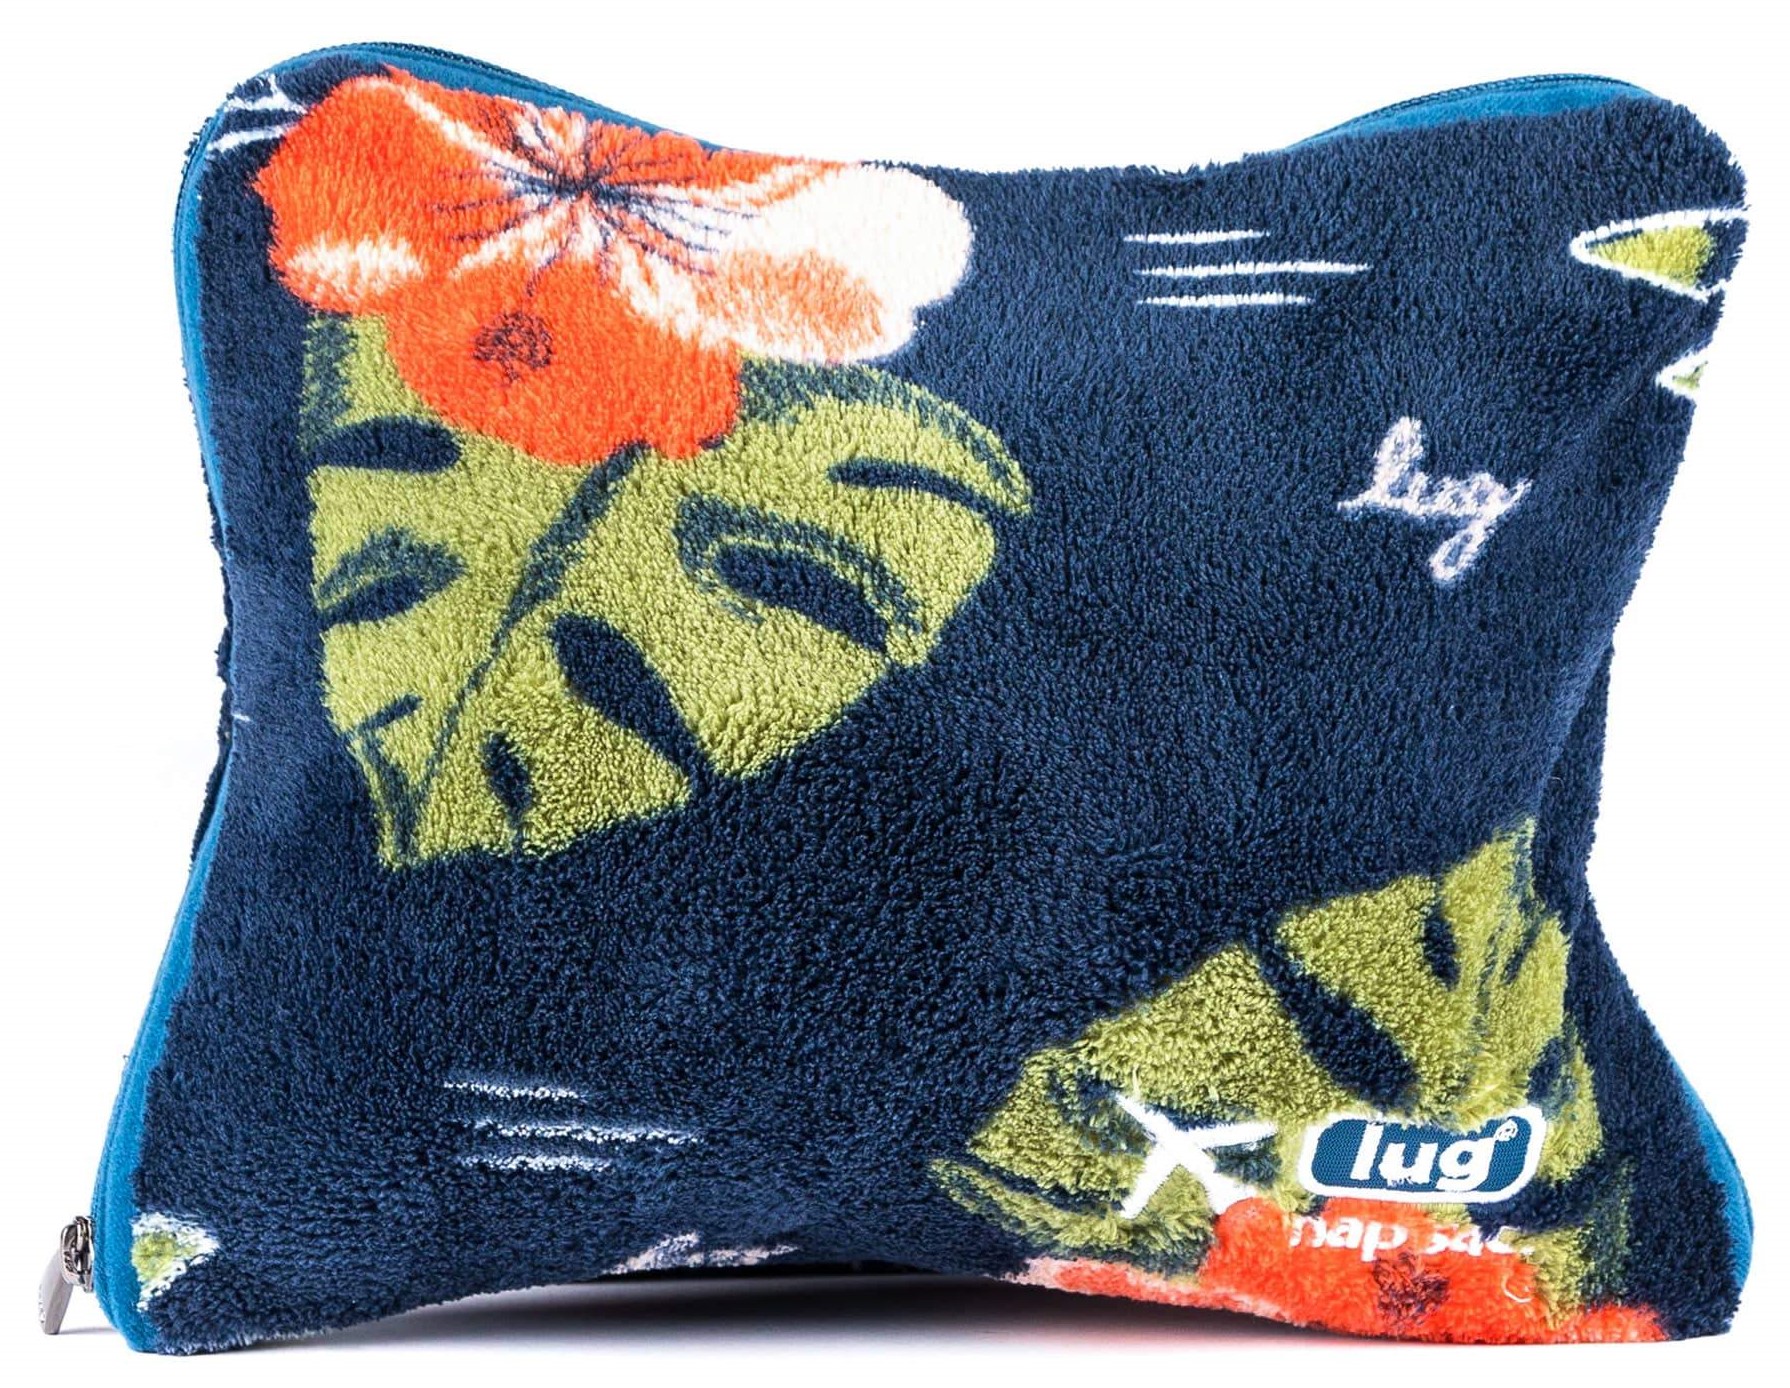 LUG Nap Sac Travel Pillow Blanket Aloha Navy Planktown Hardware More